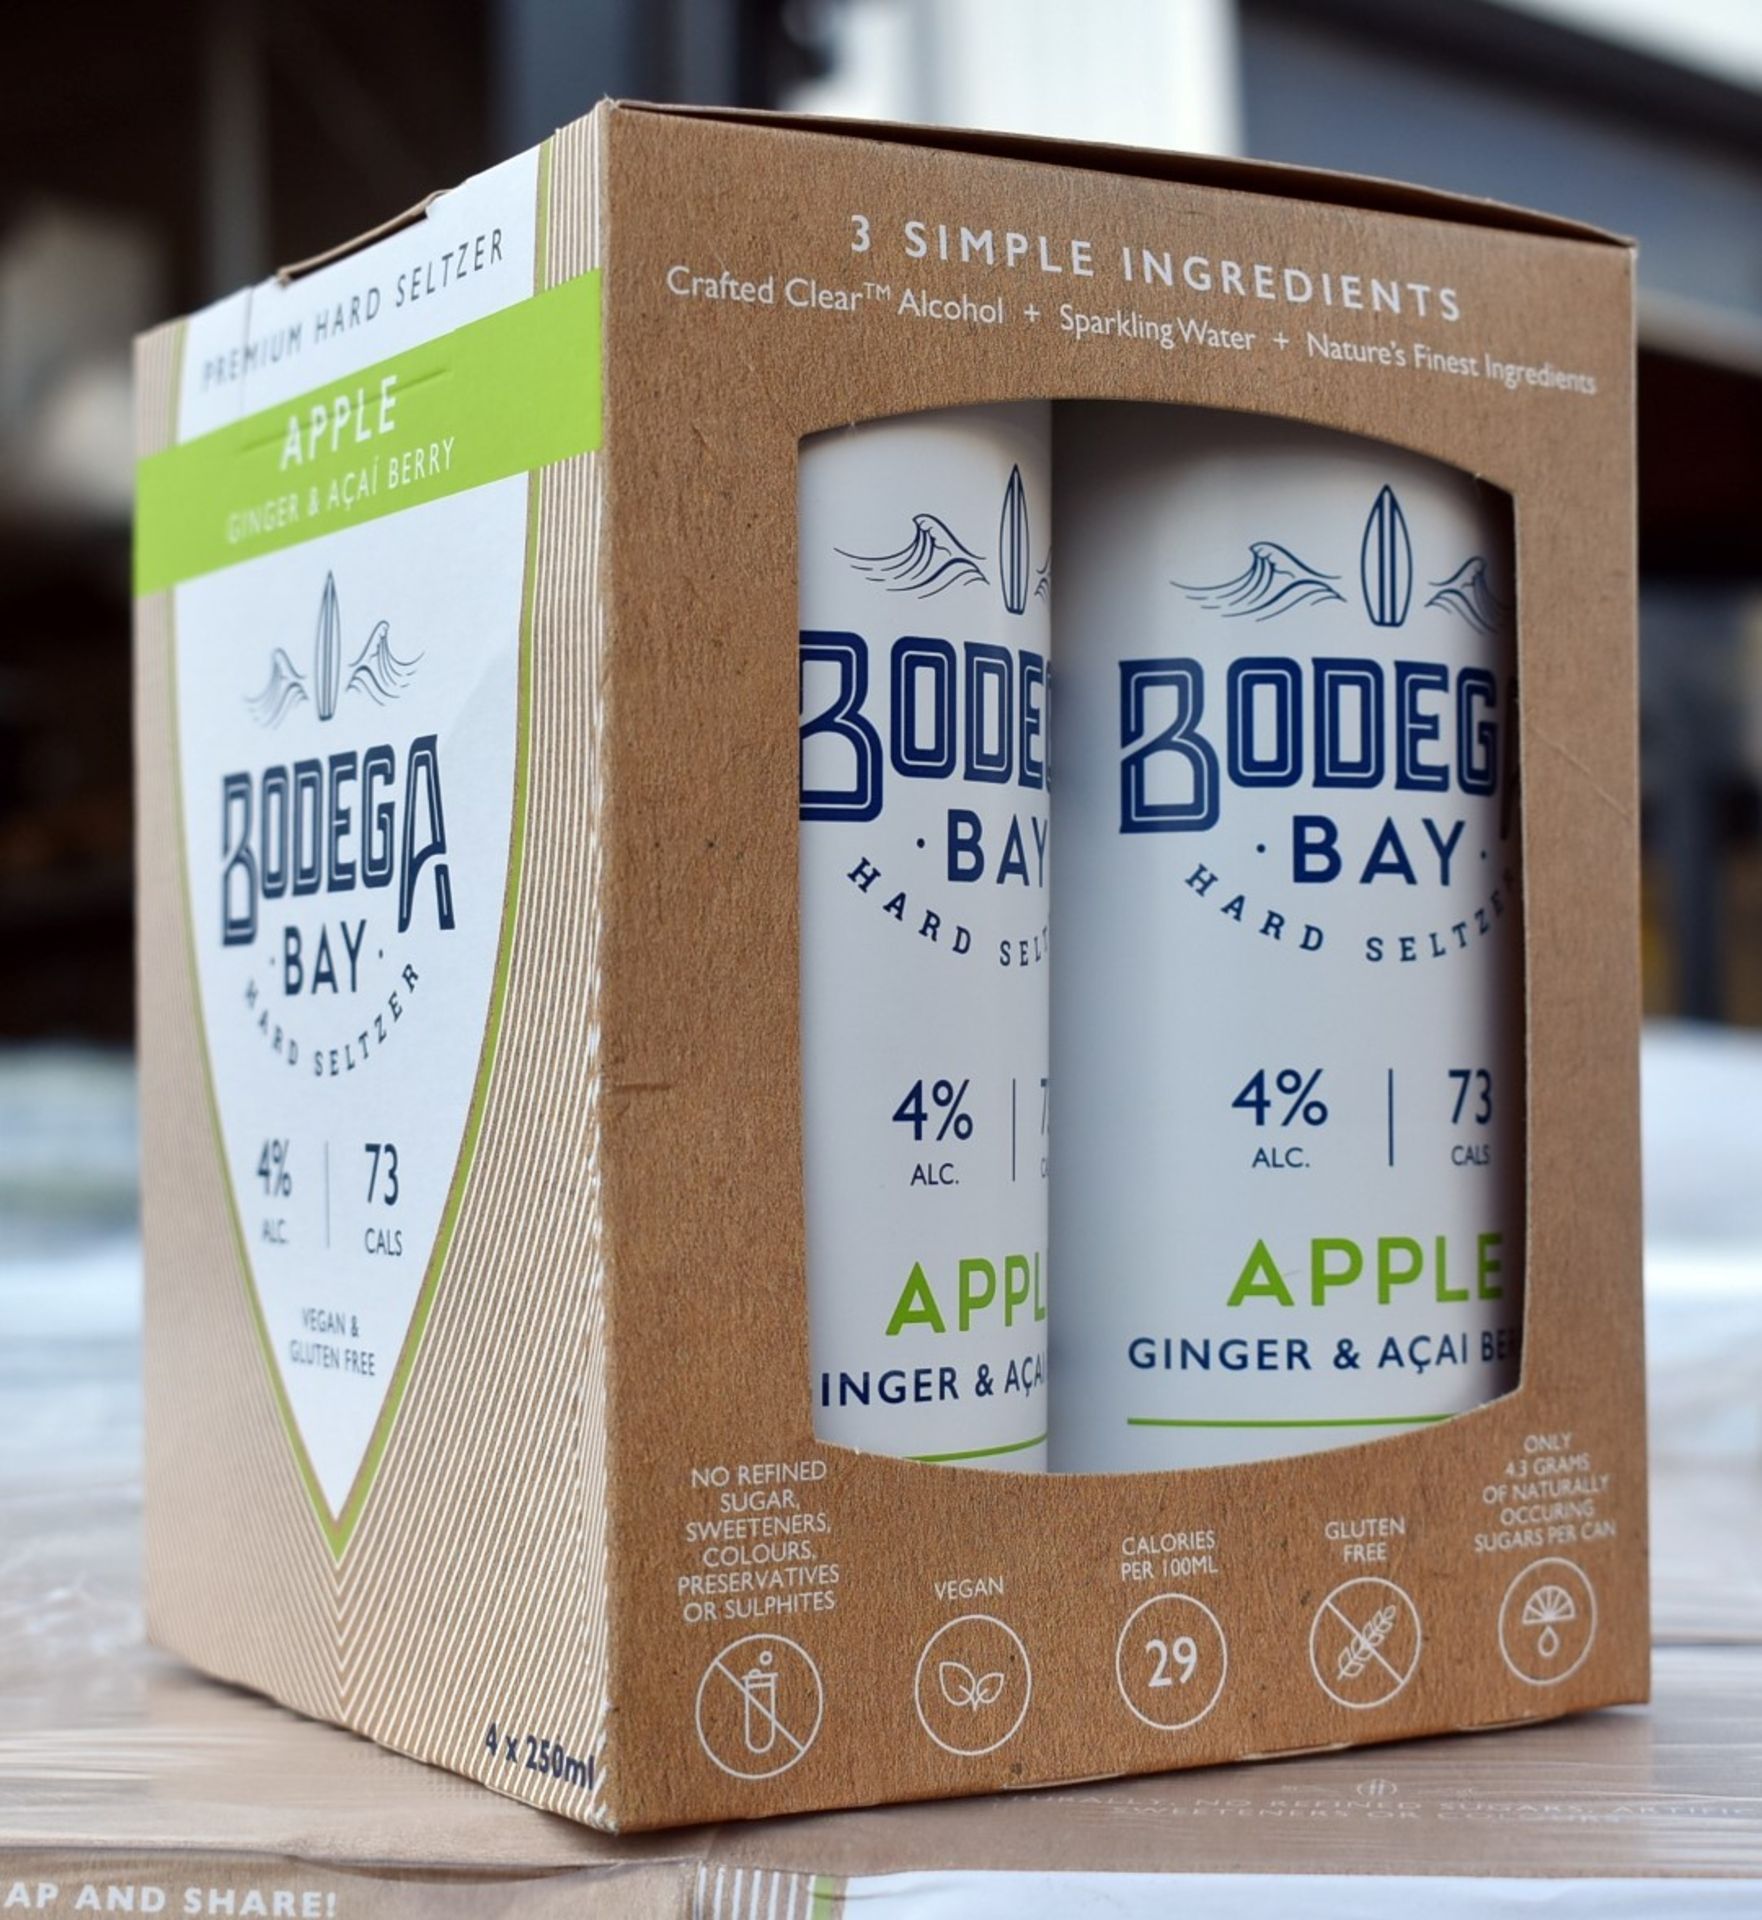 24 x Bodega Bay Hard Seltzer 250ml Alcoholic Sparkling Water Drinks - Apple Ginger & Acai Berry - Image 3 of 11